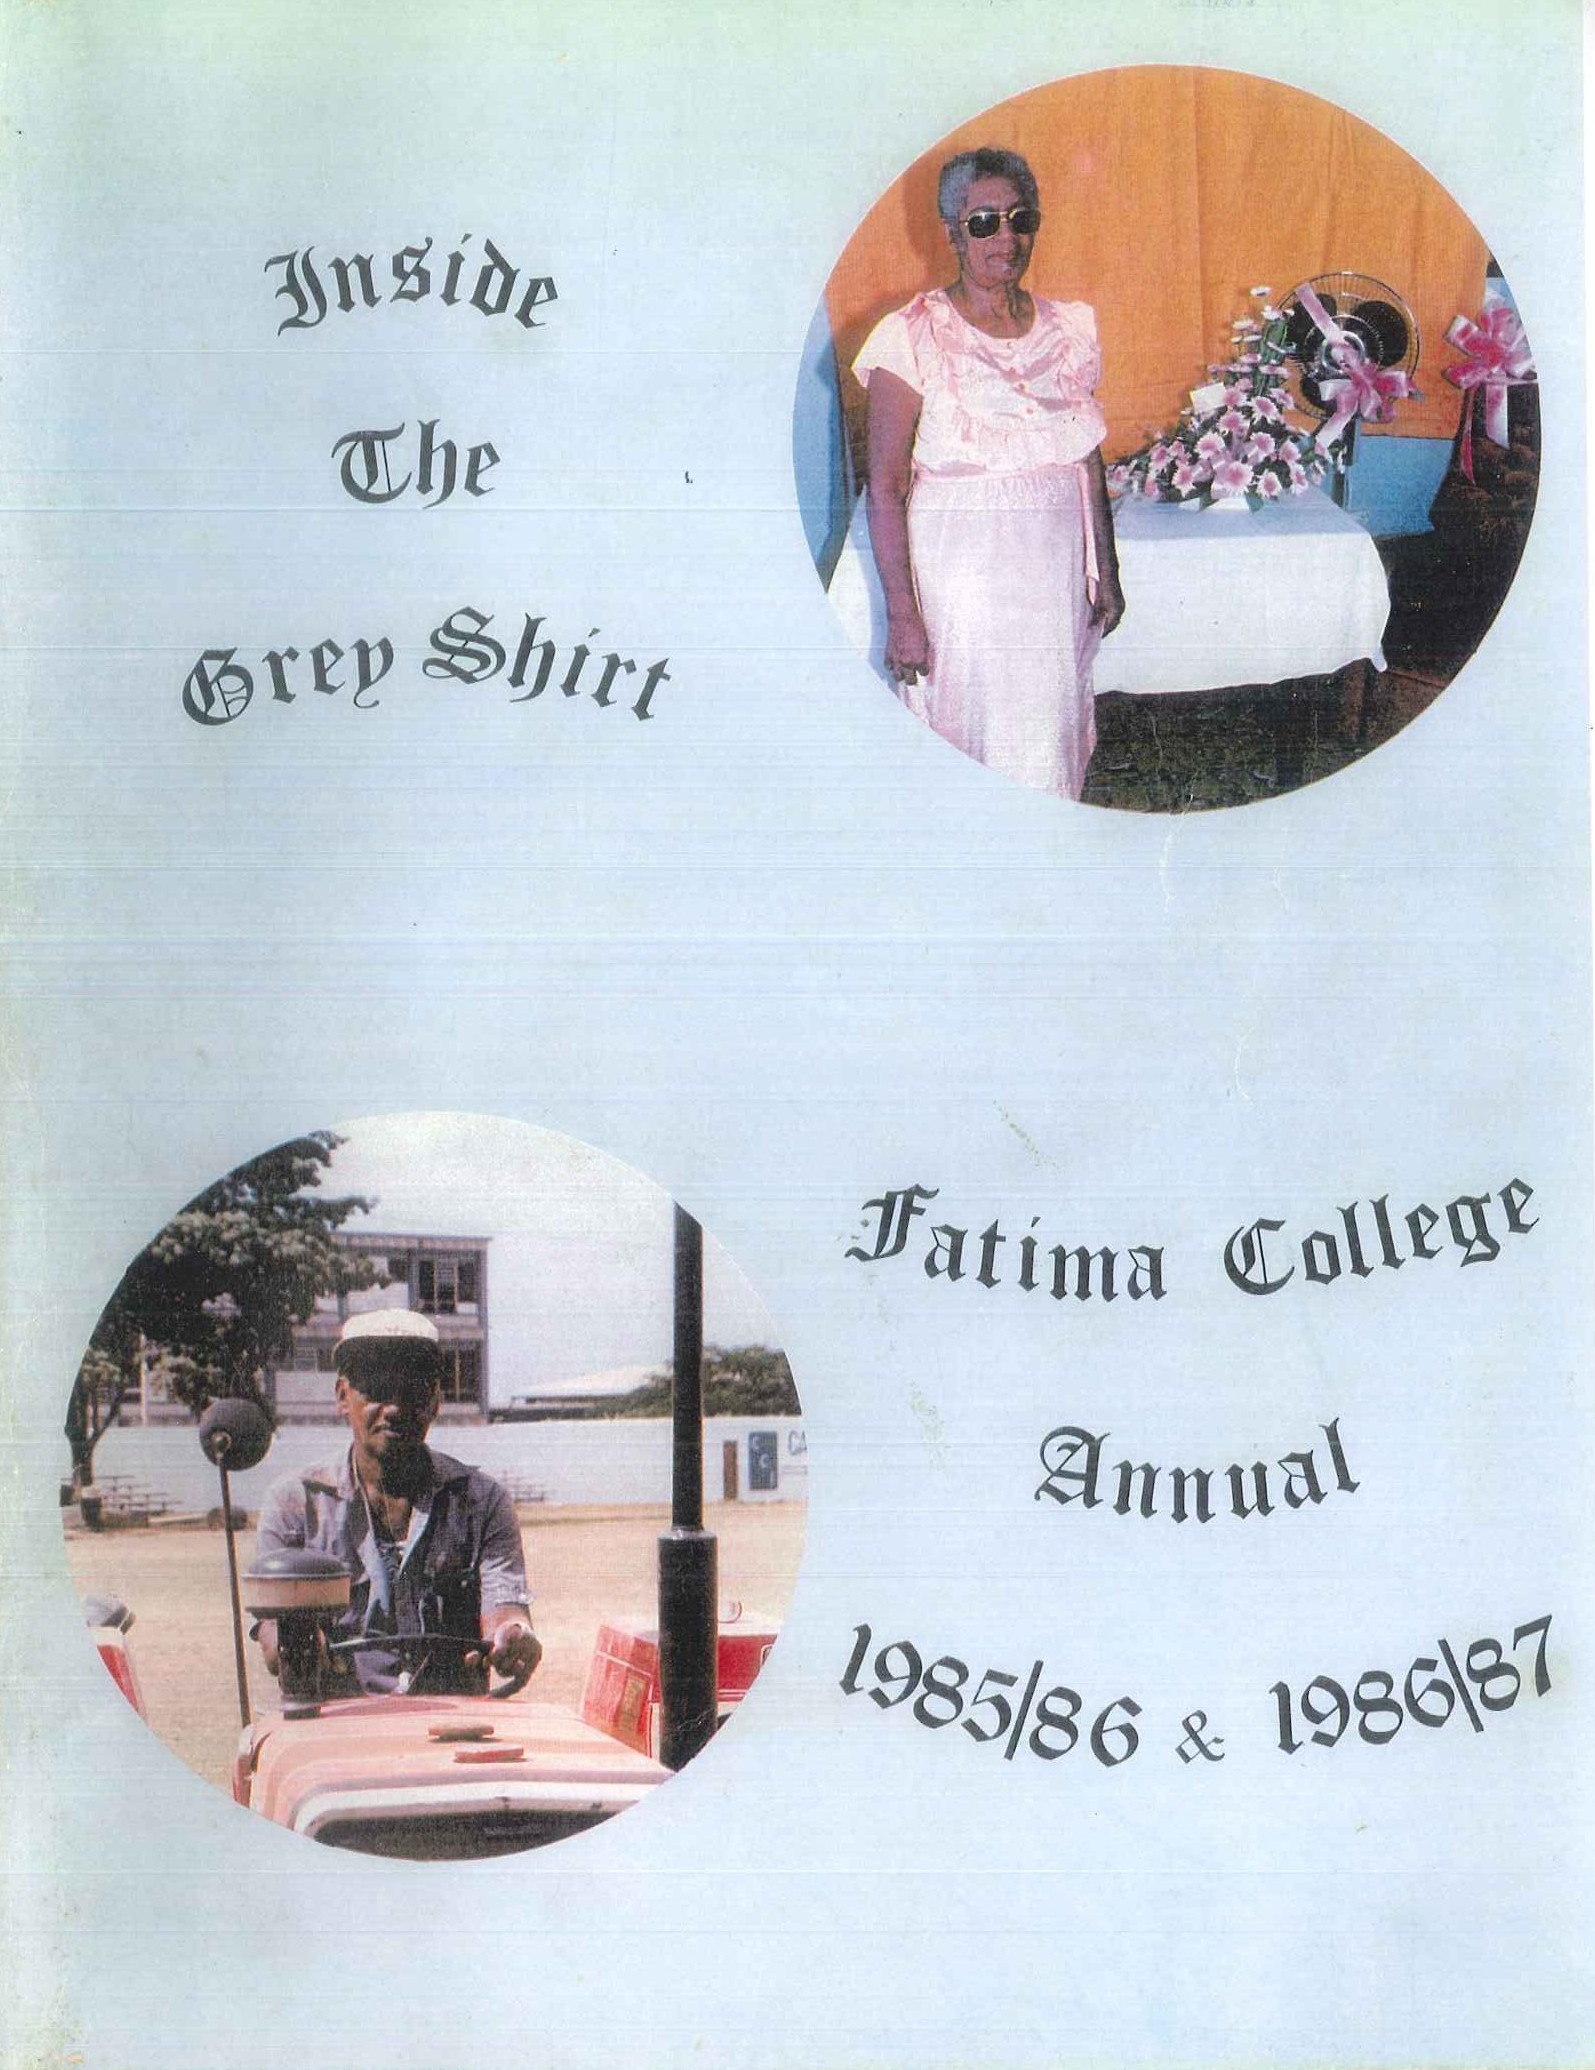 Fatima College School Annual 1984-1985 (14MB)